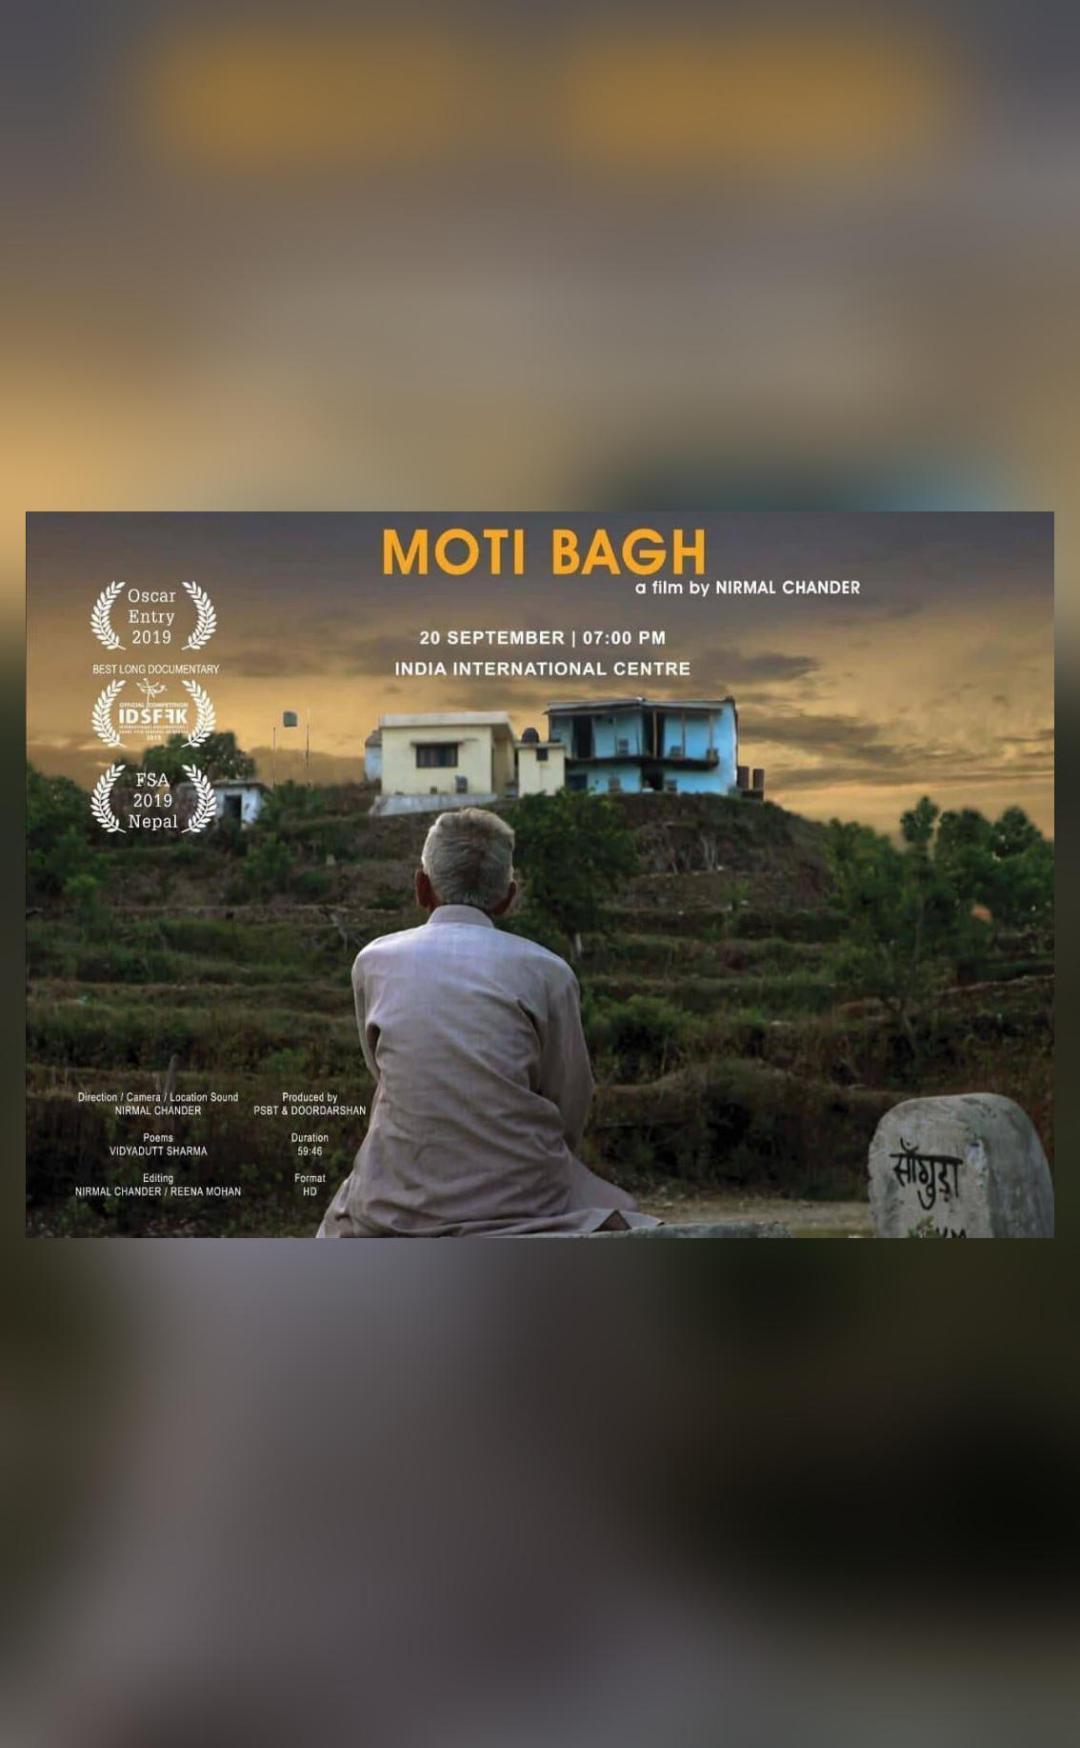 A documentary film based on the life of Uttarakhand farmer nominated for Oscars